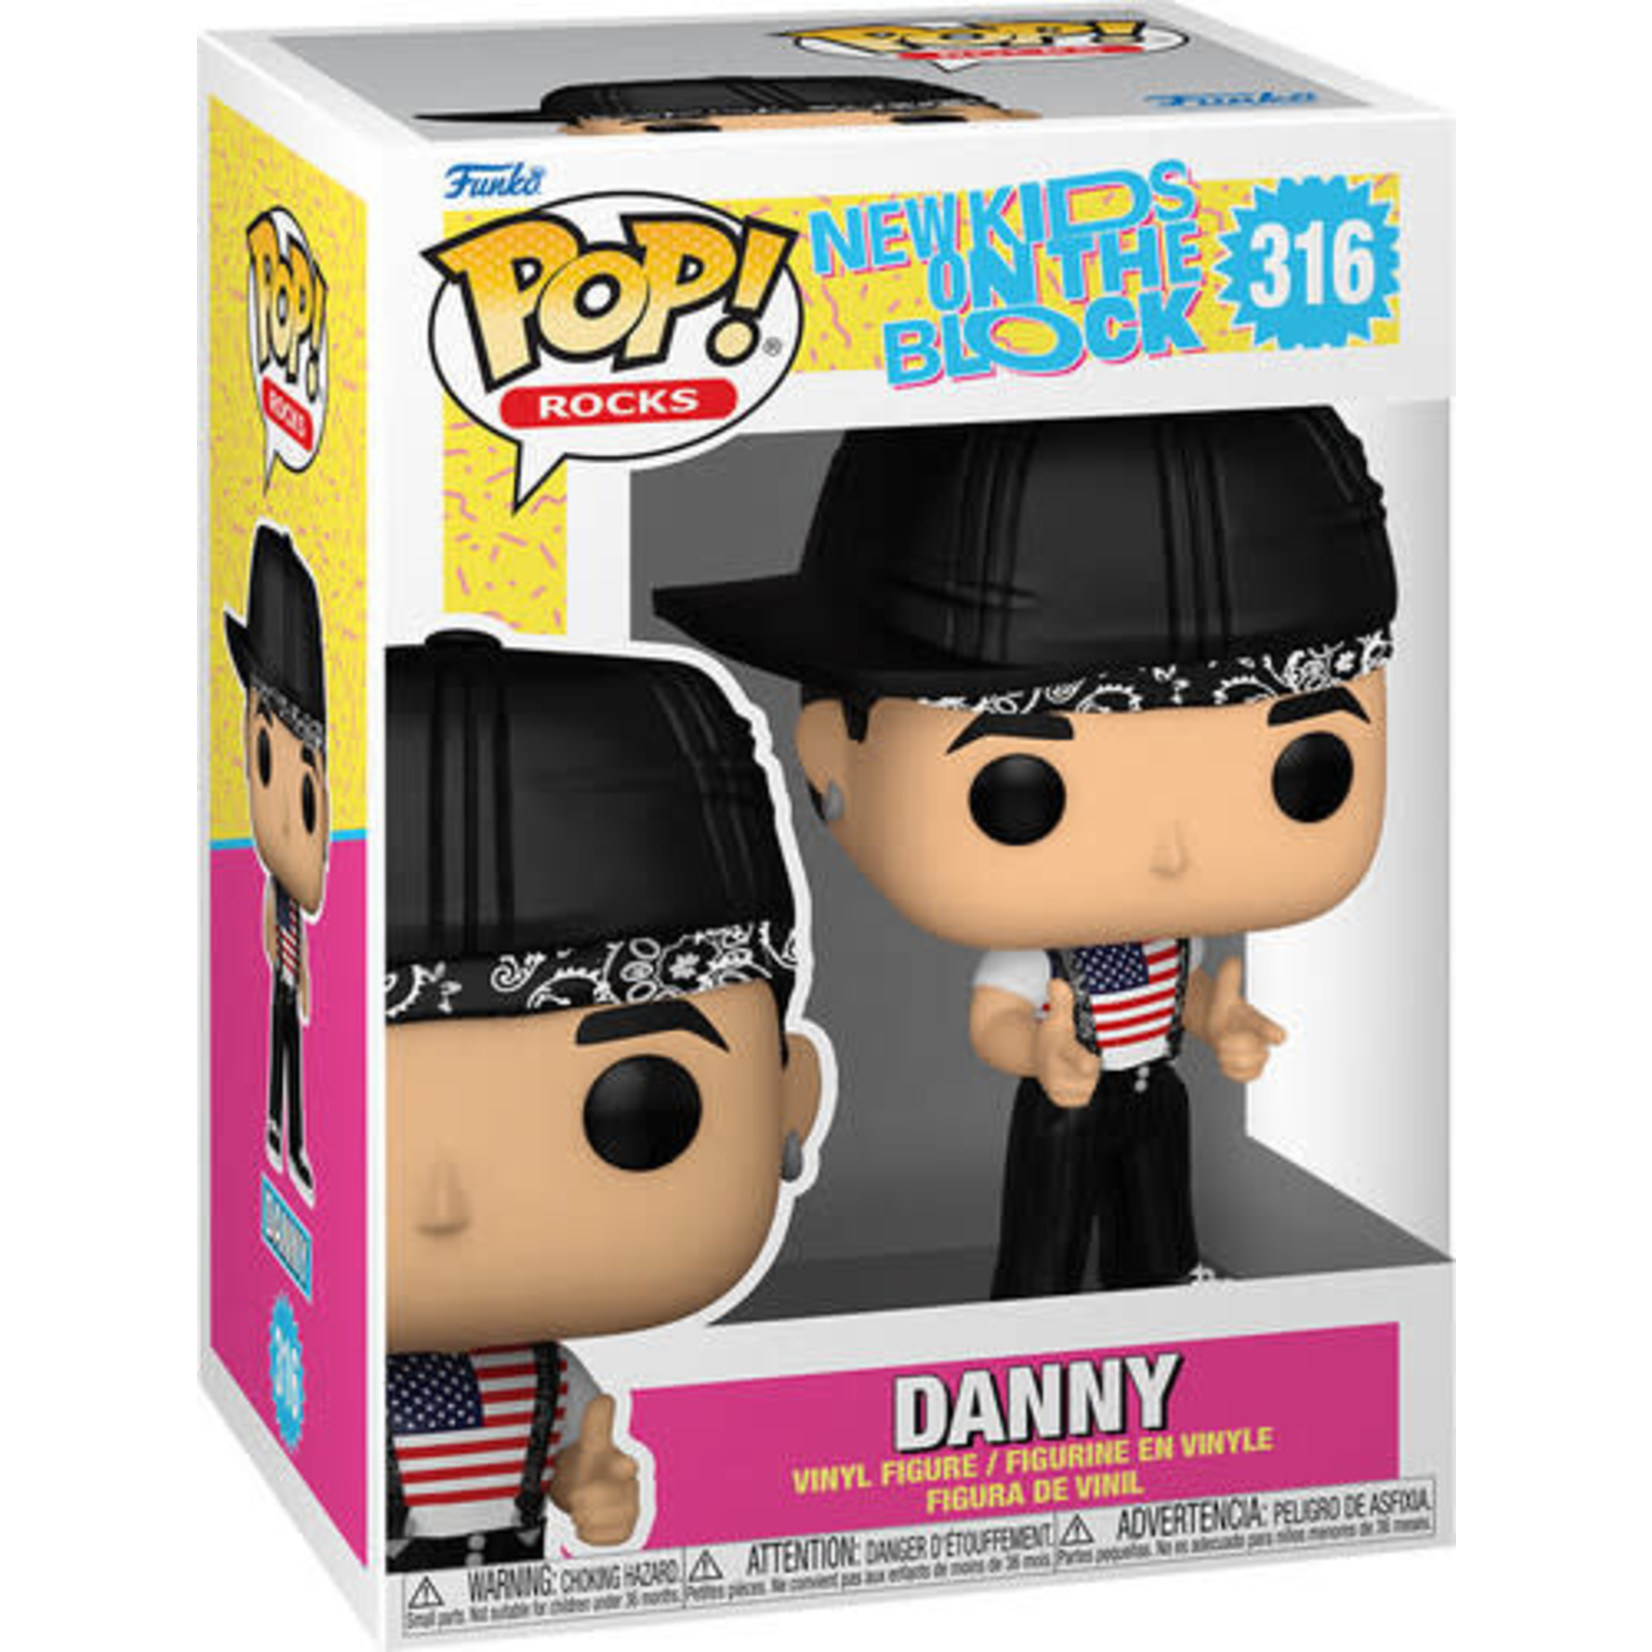 Pop! Rocks 316 - New Kids On The Block: Danny